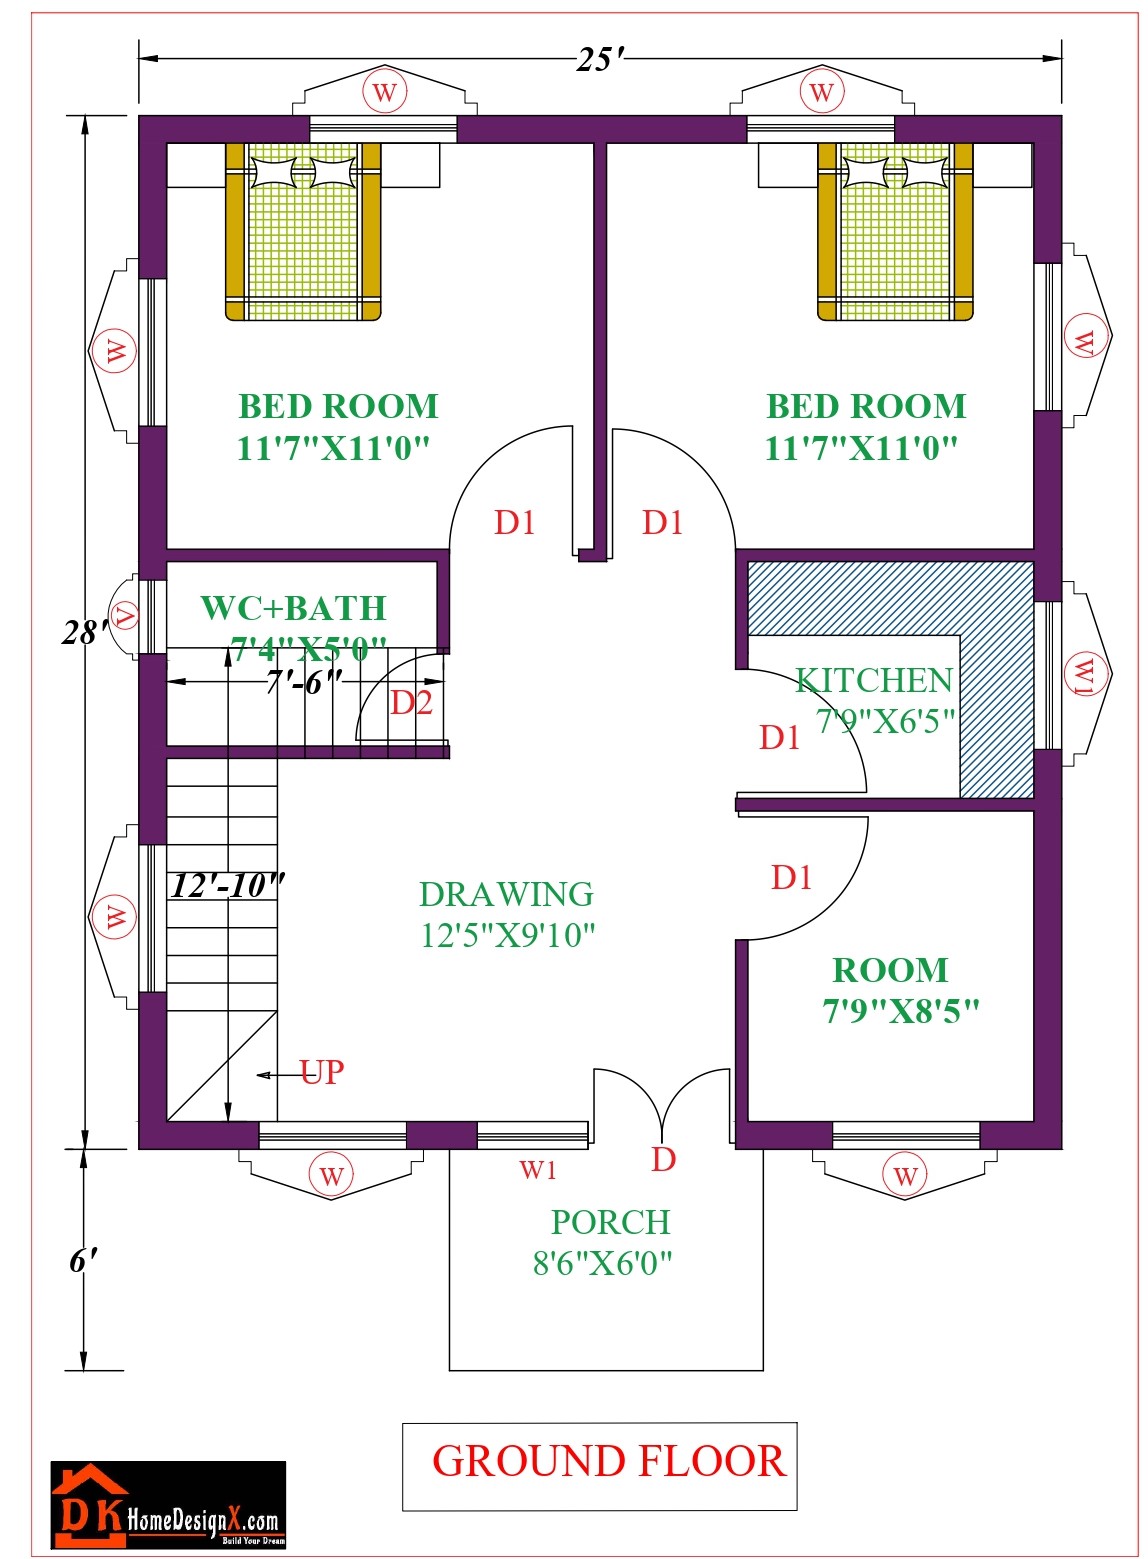 25X28 Small House Design - DK Home DesignX